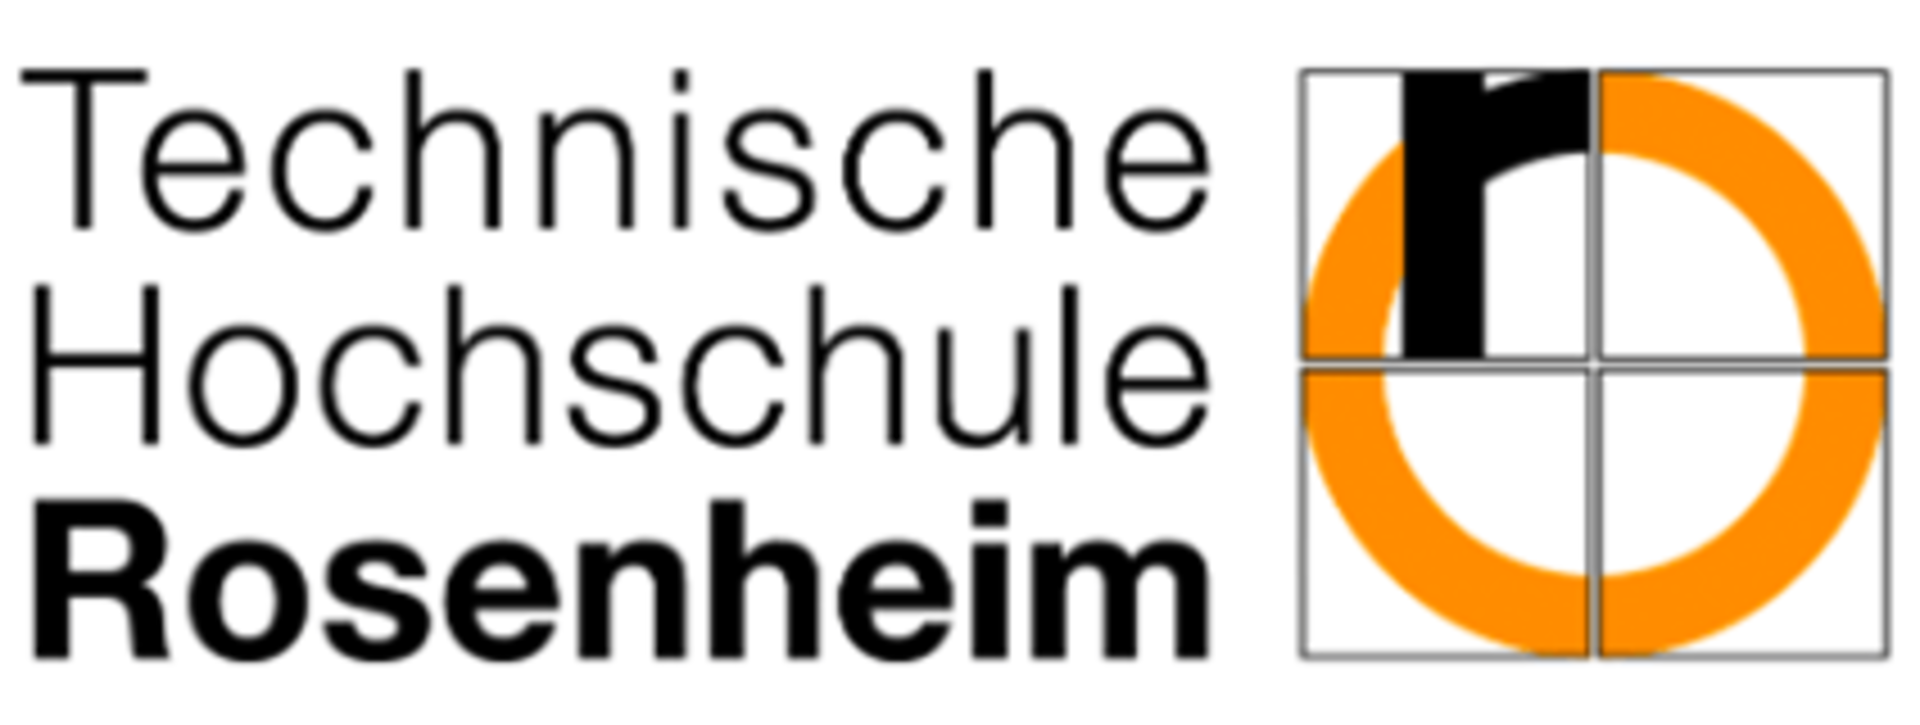 Hochschulberatung - Technische Hochschule Rosenheim